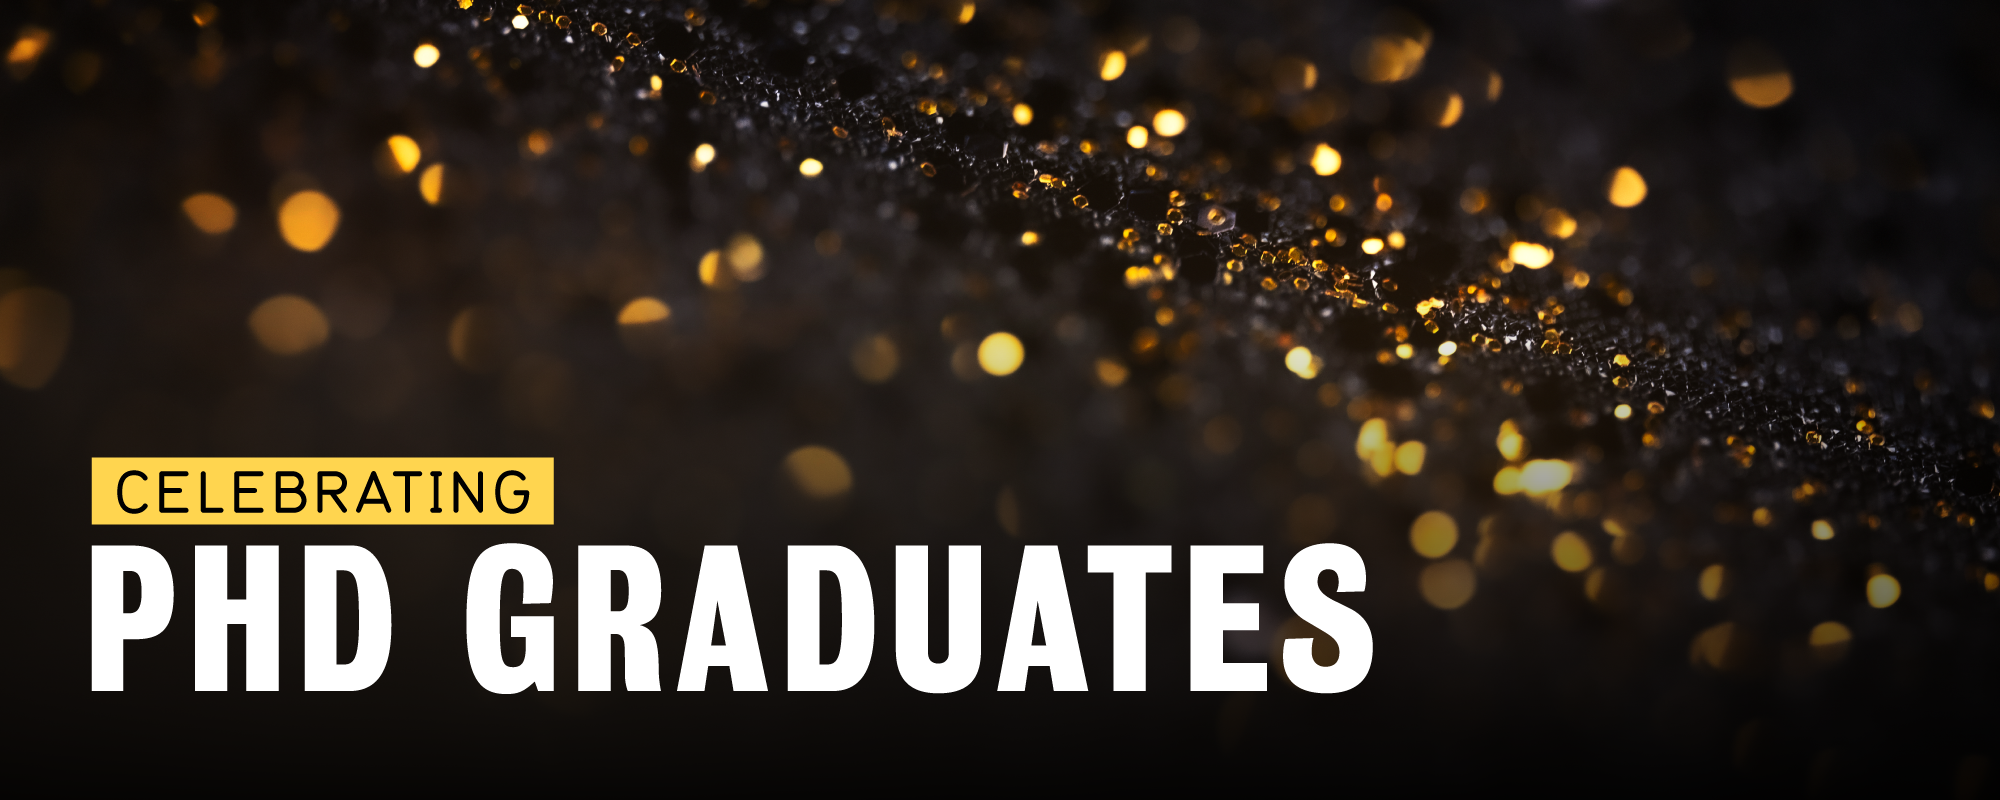 Celebrating PhD graduates